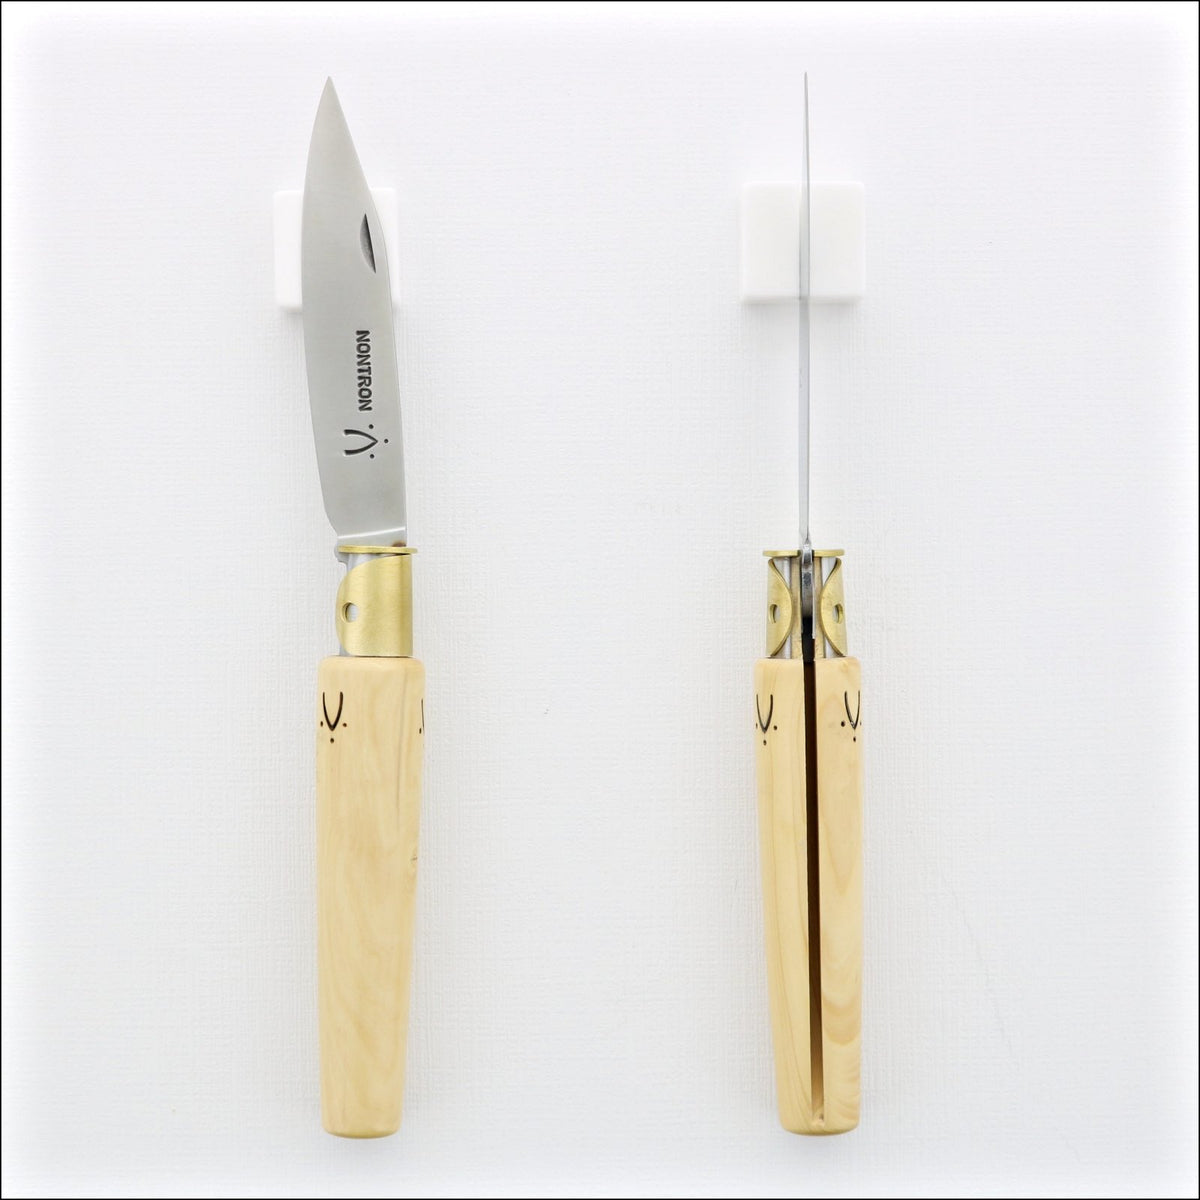 Nontron Pocket Knife No25 - Grand Duc